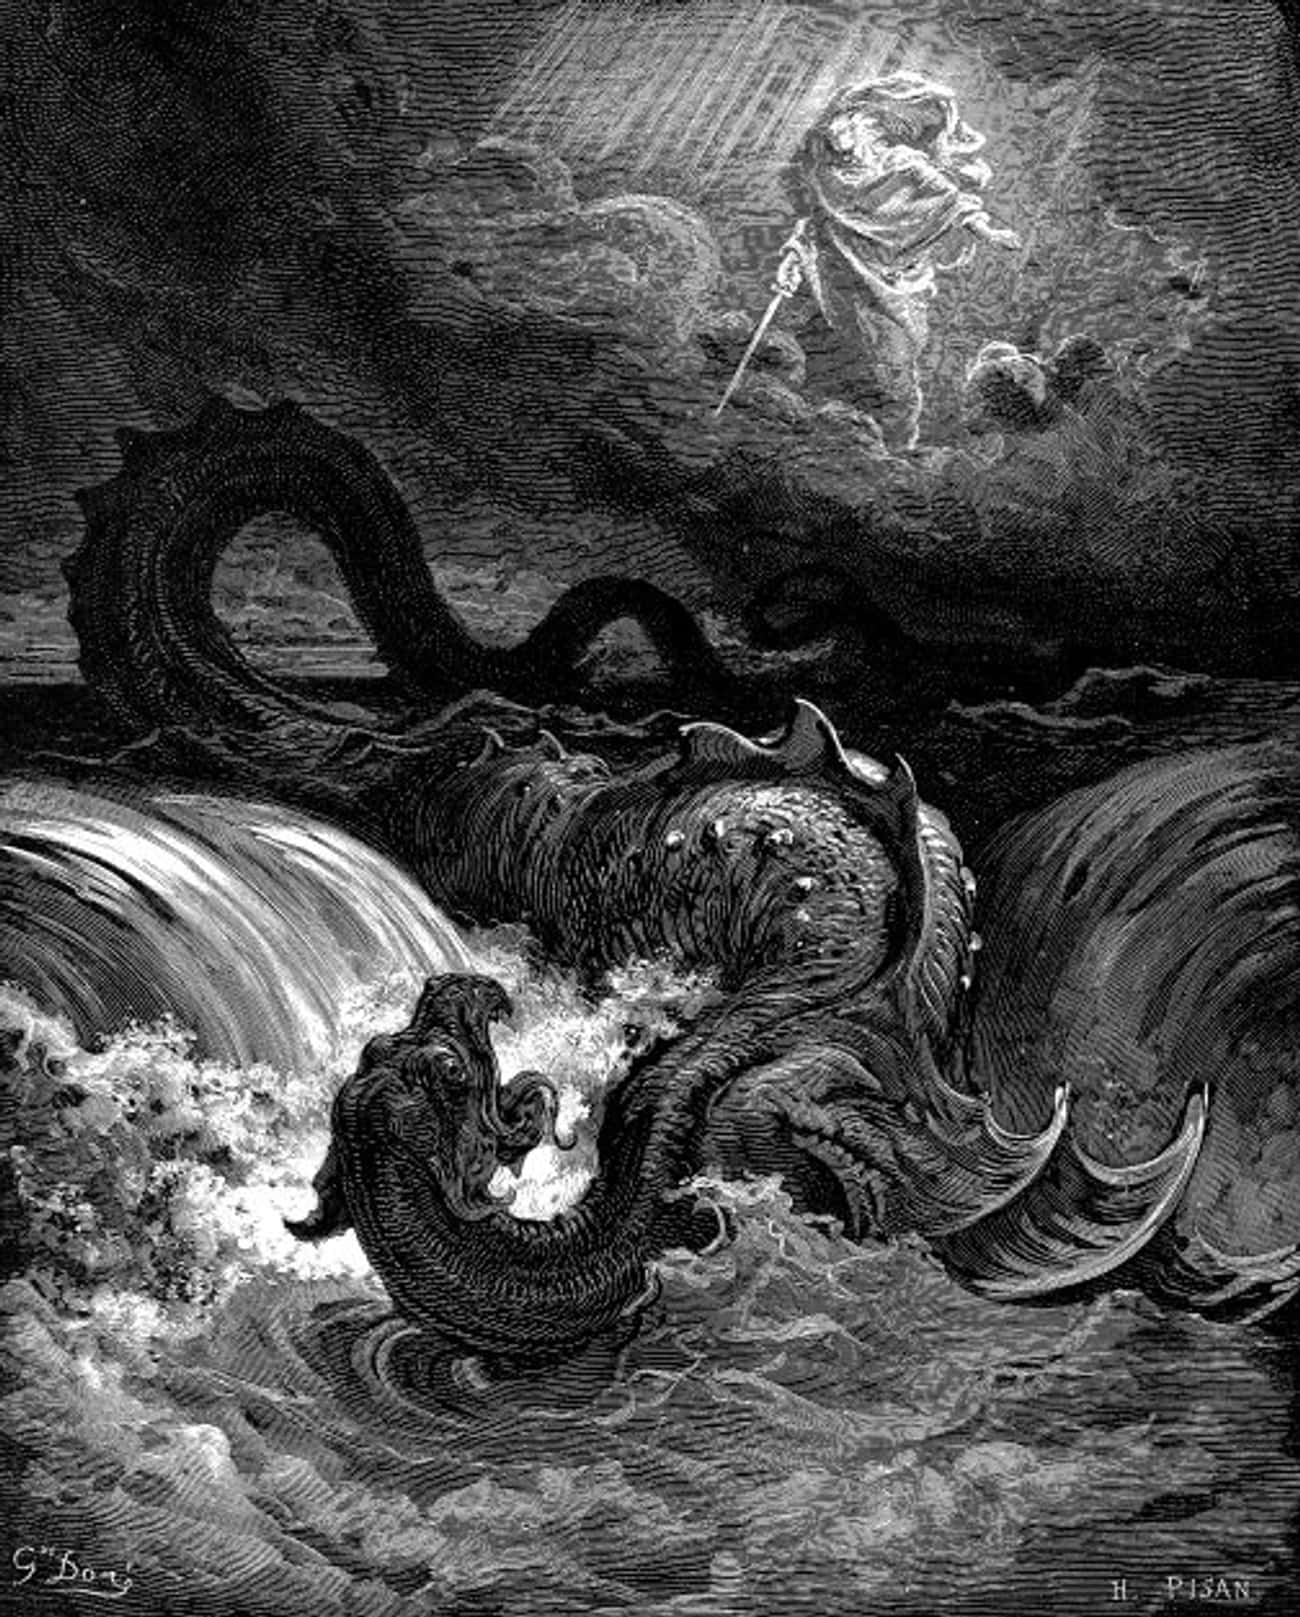 Judaism: Leviathan